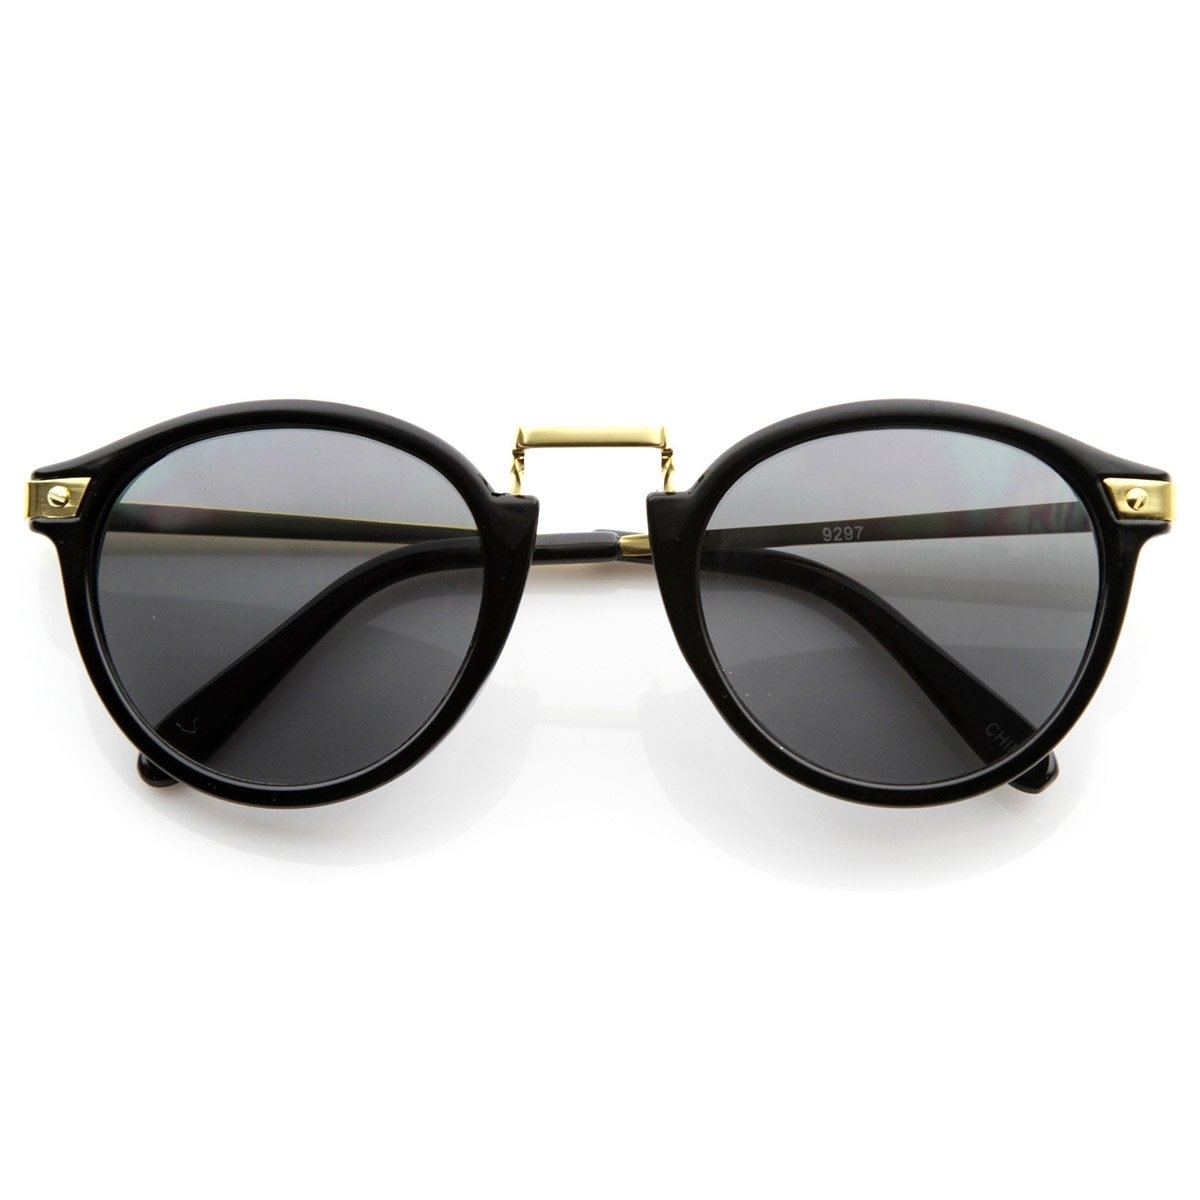 Vintage Inspired Round Horned Rim P-3 Frame Retro Sunglasses - Black-Gold Ice